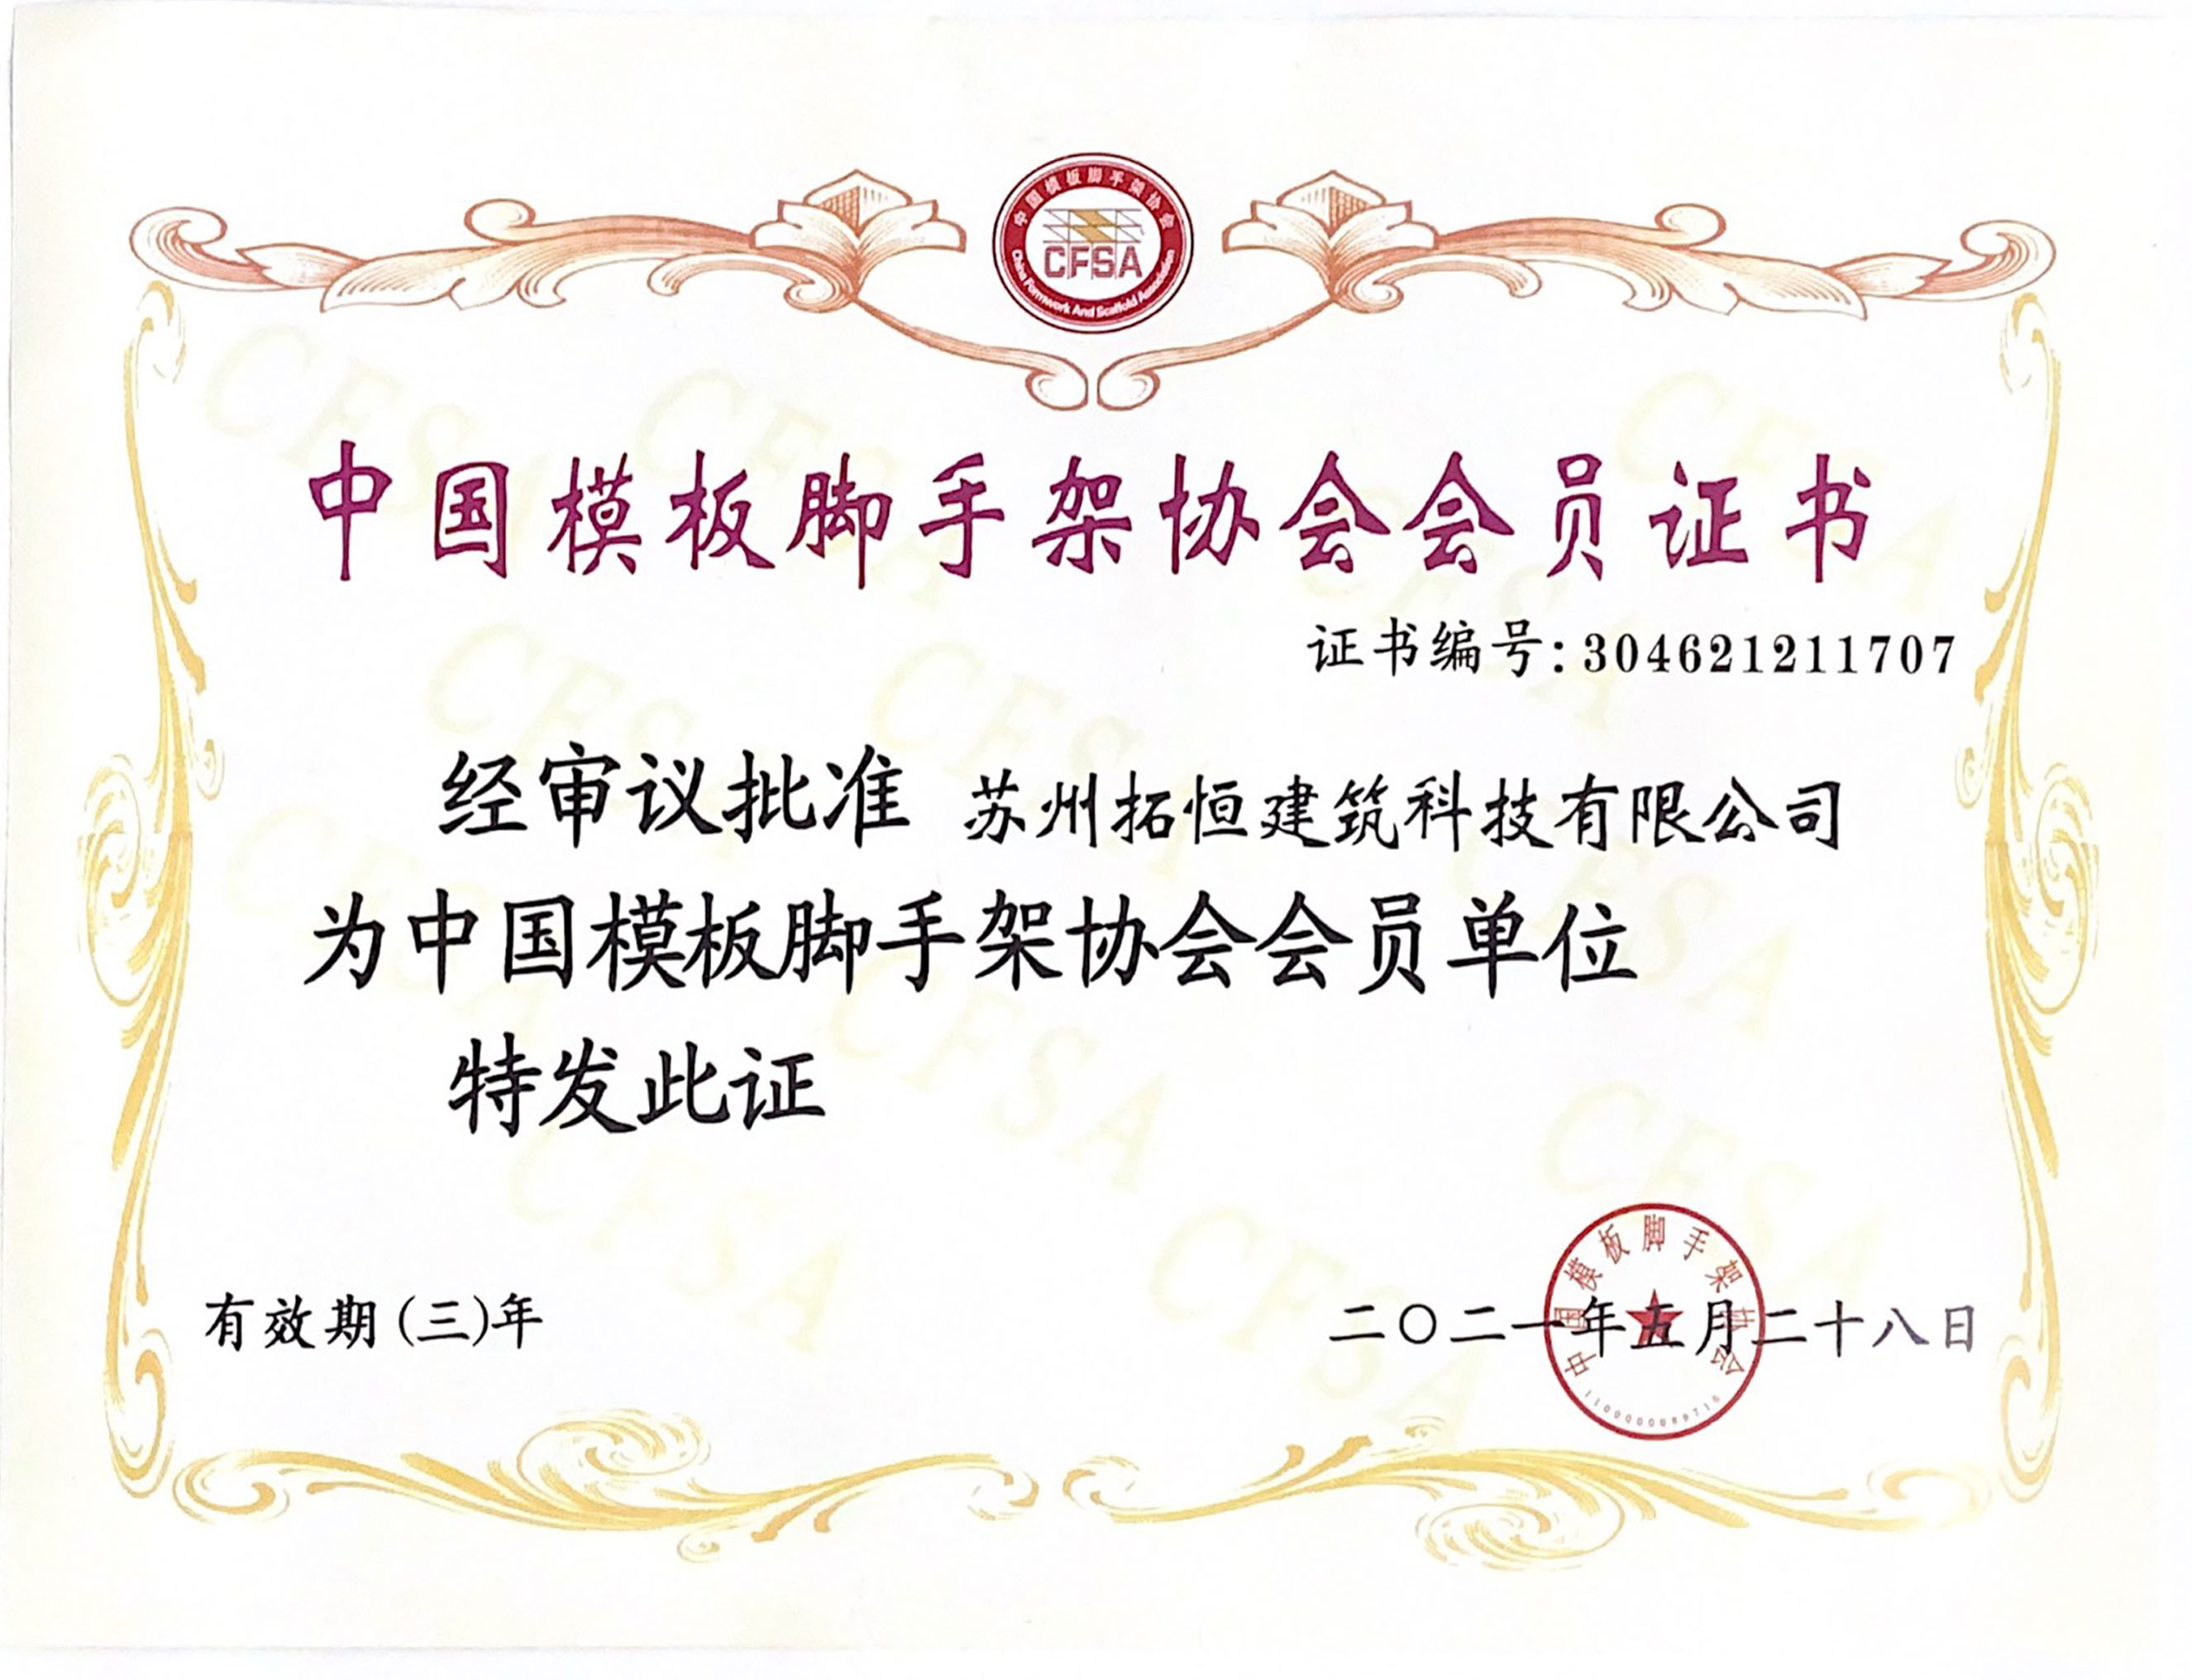 Certificado de membro da China Coformwork and Scaffold Association